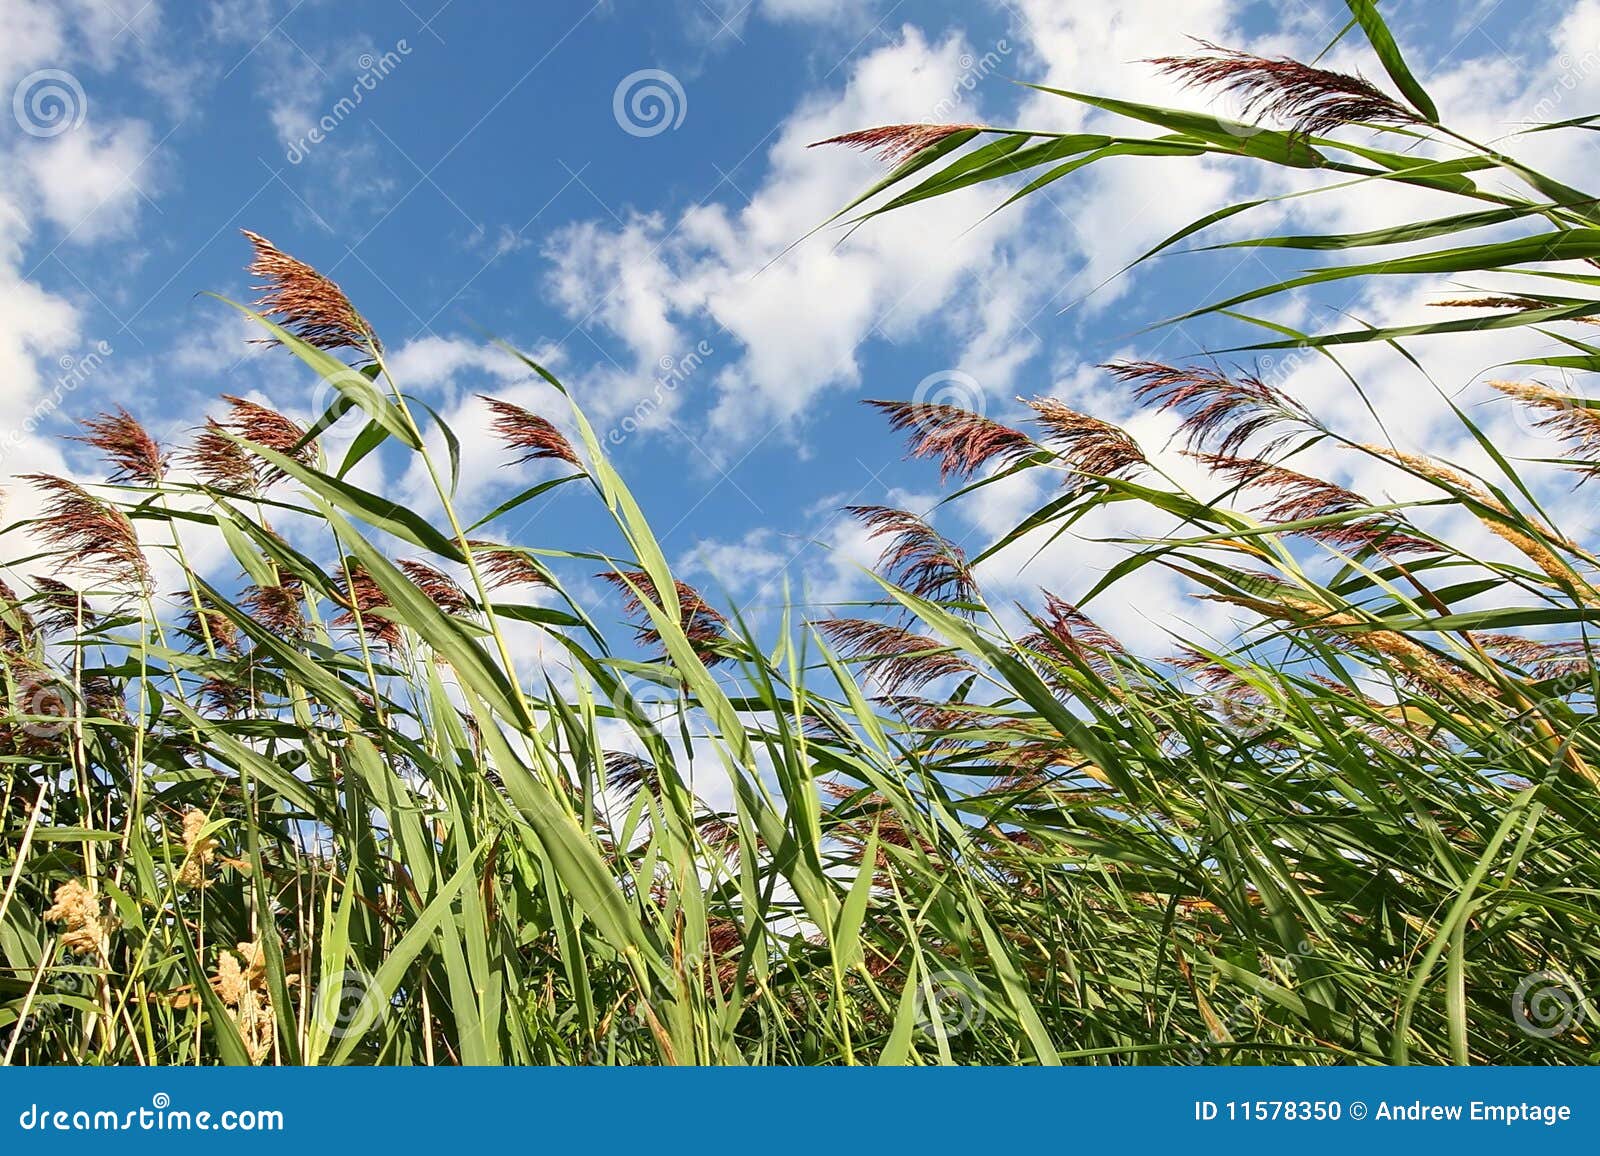 sky through reeds